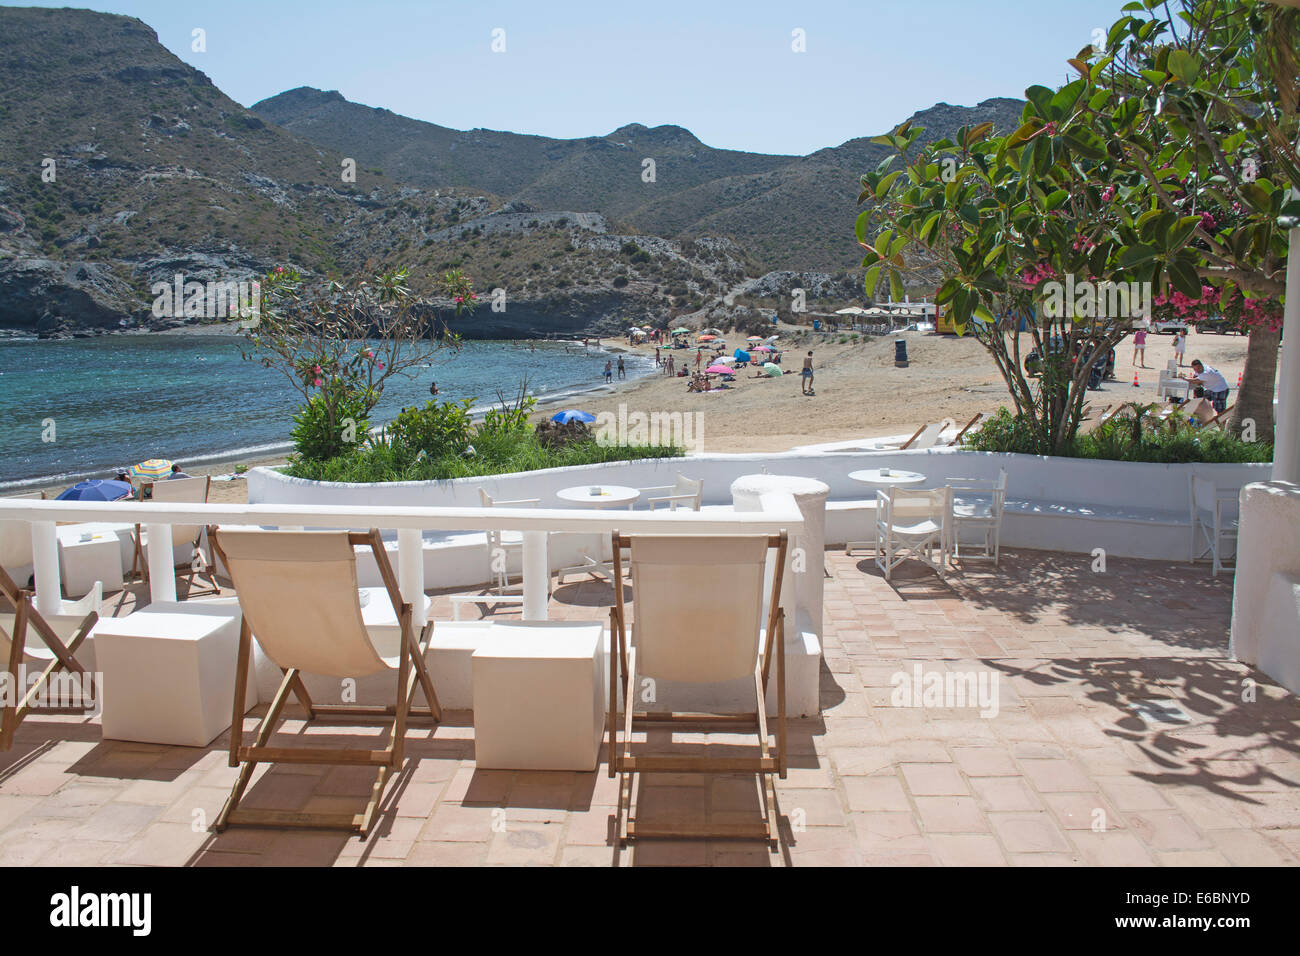 Bar and Restaurant at Cala Reona Beach on the Mediterranean coastline of Costa Calida, East Coast of Spain Stock Photo